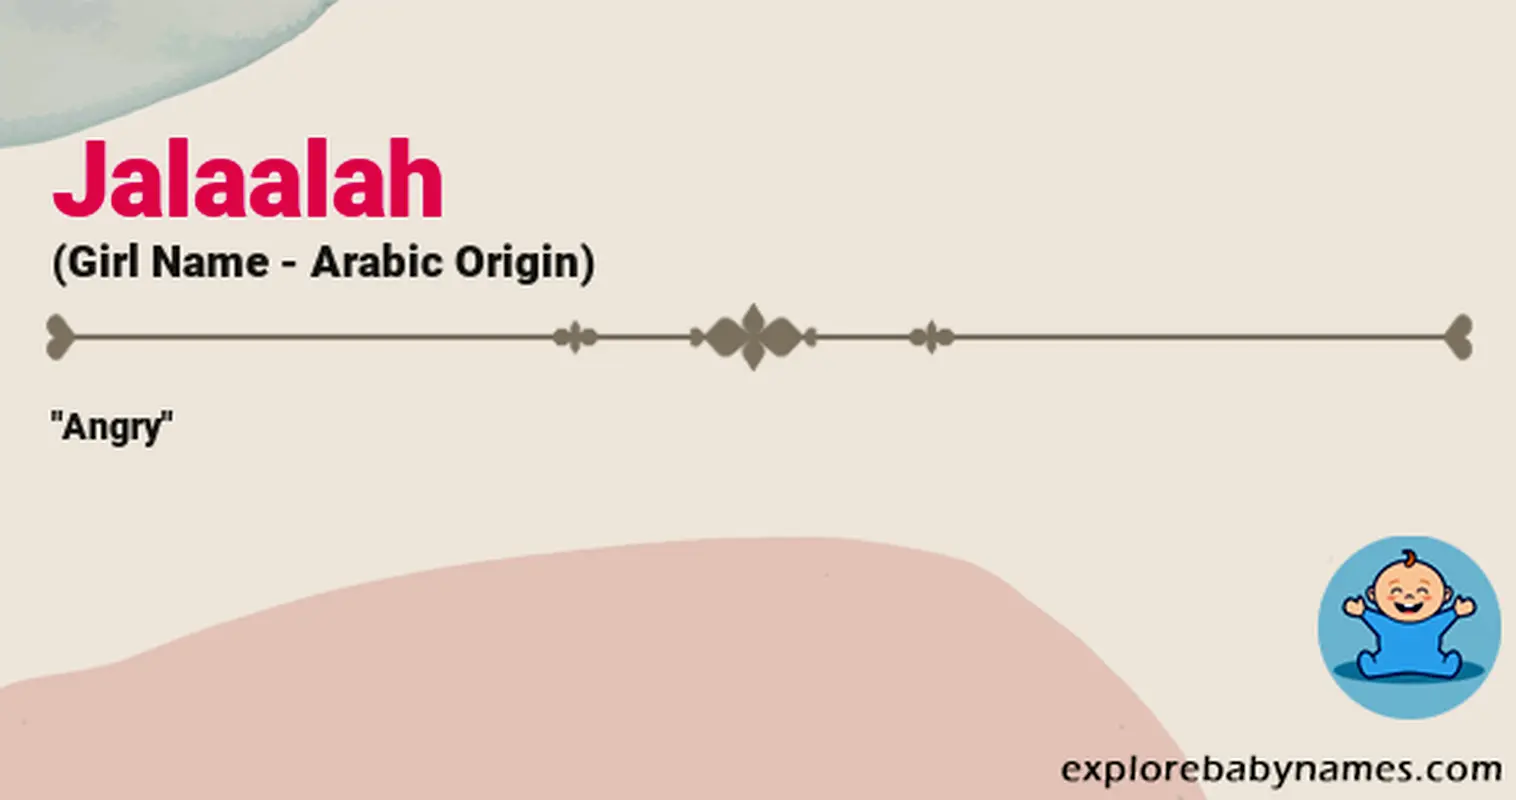 Meaning of Jalaalah